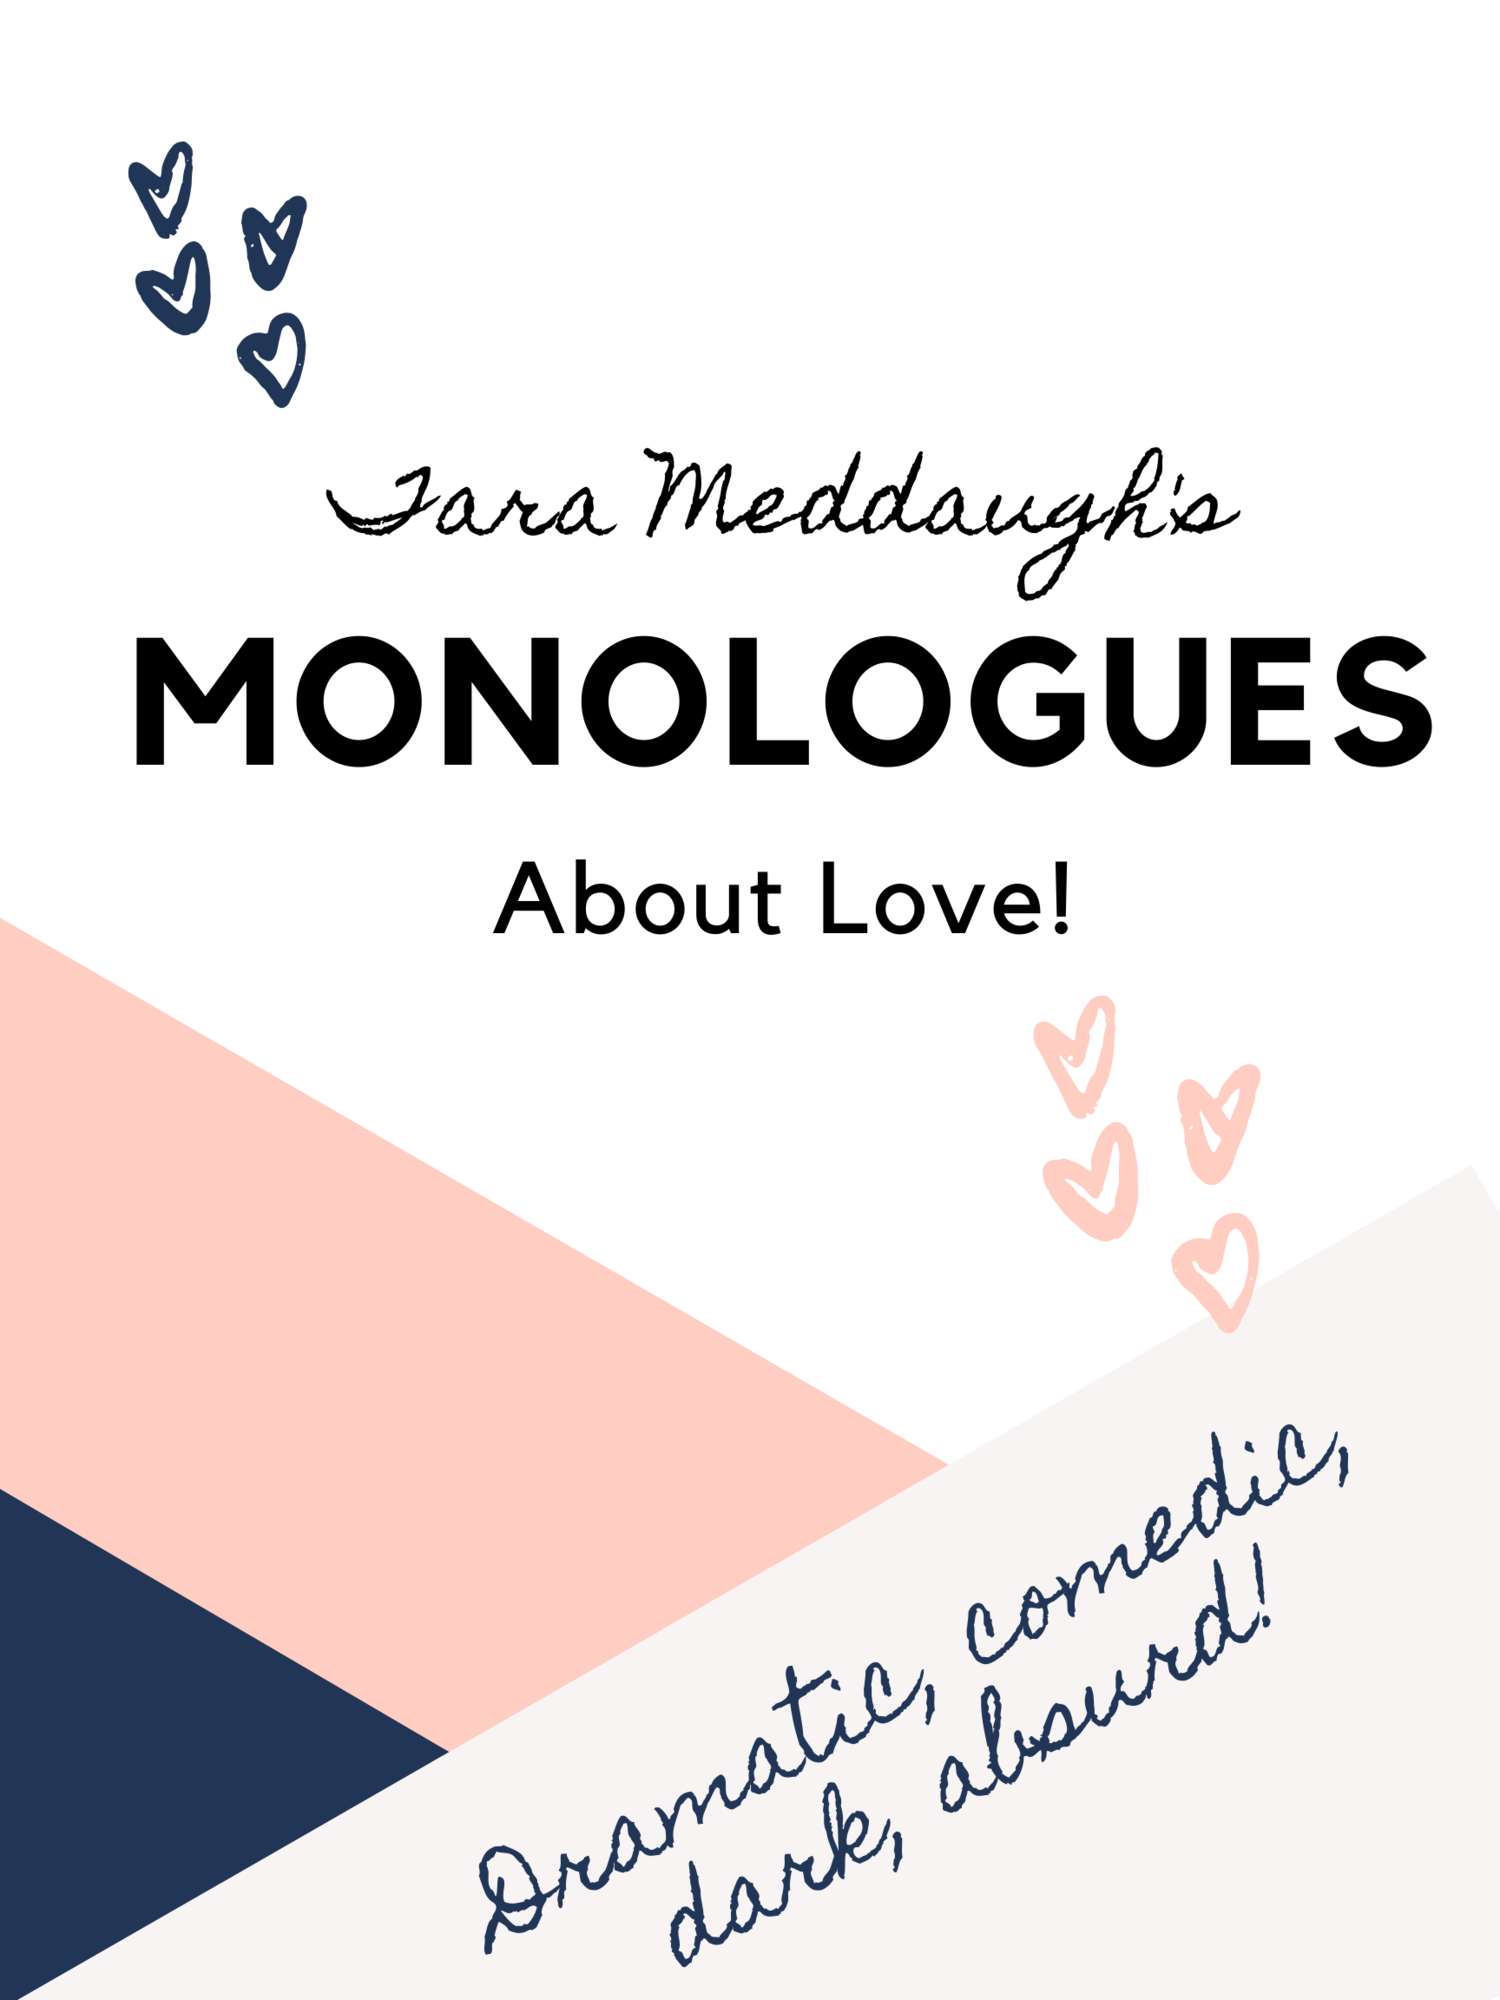 25 Unique Monologues About Love... — Tara Meddaugh